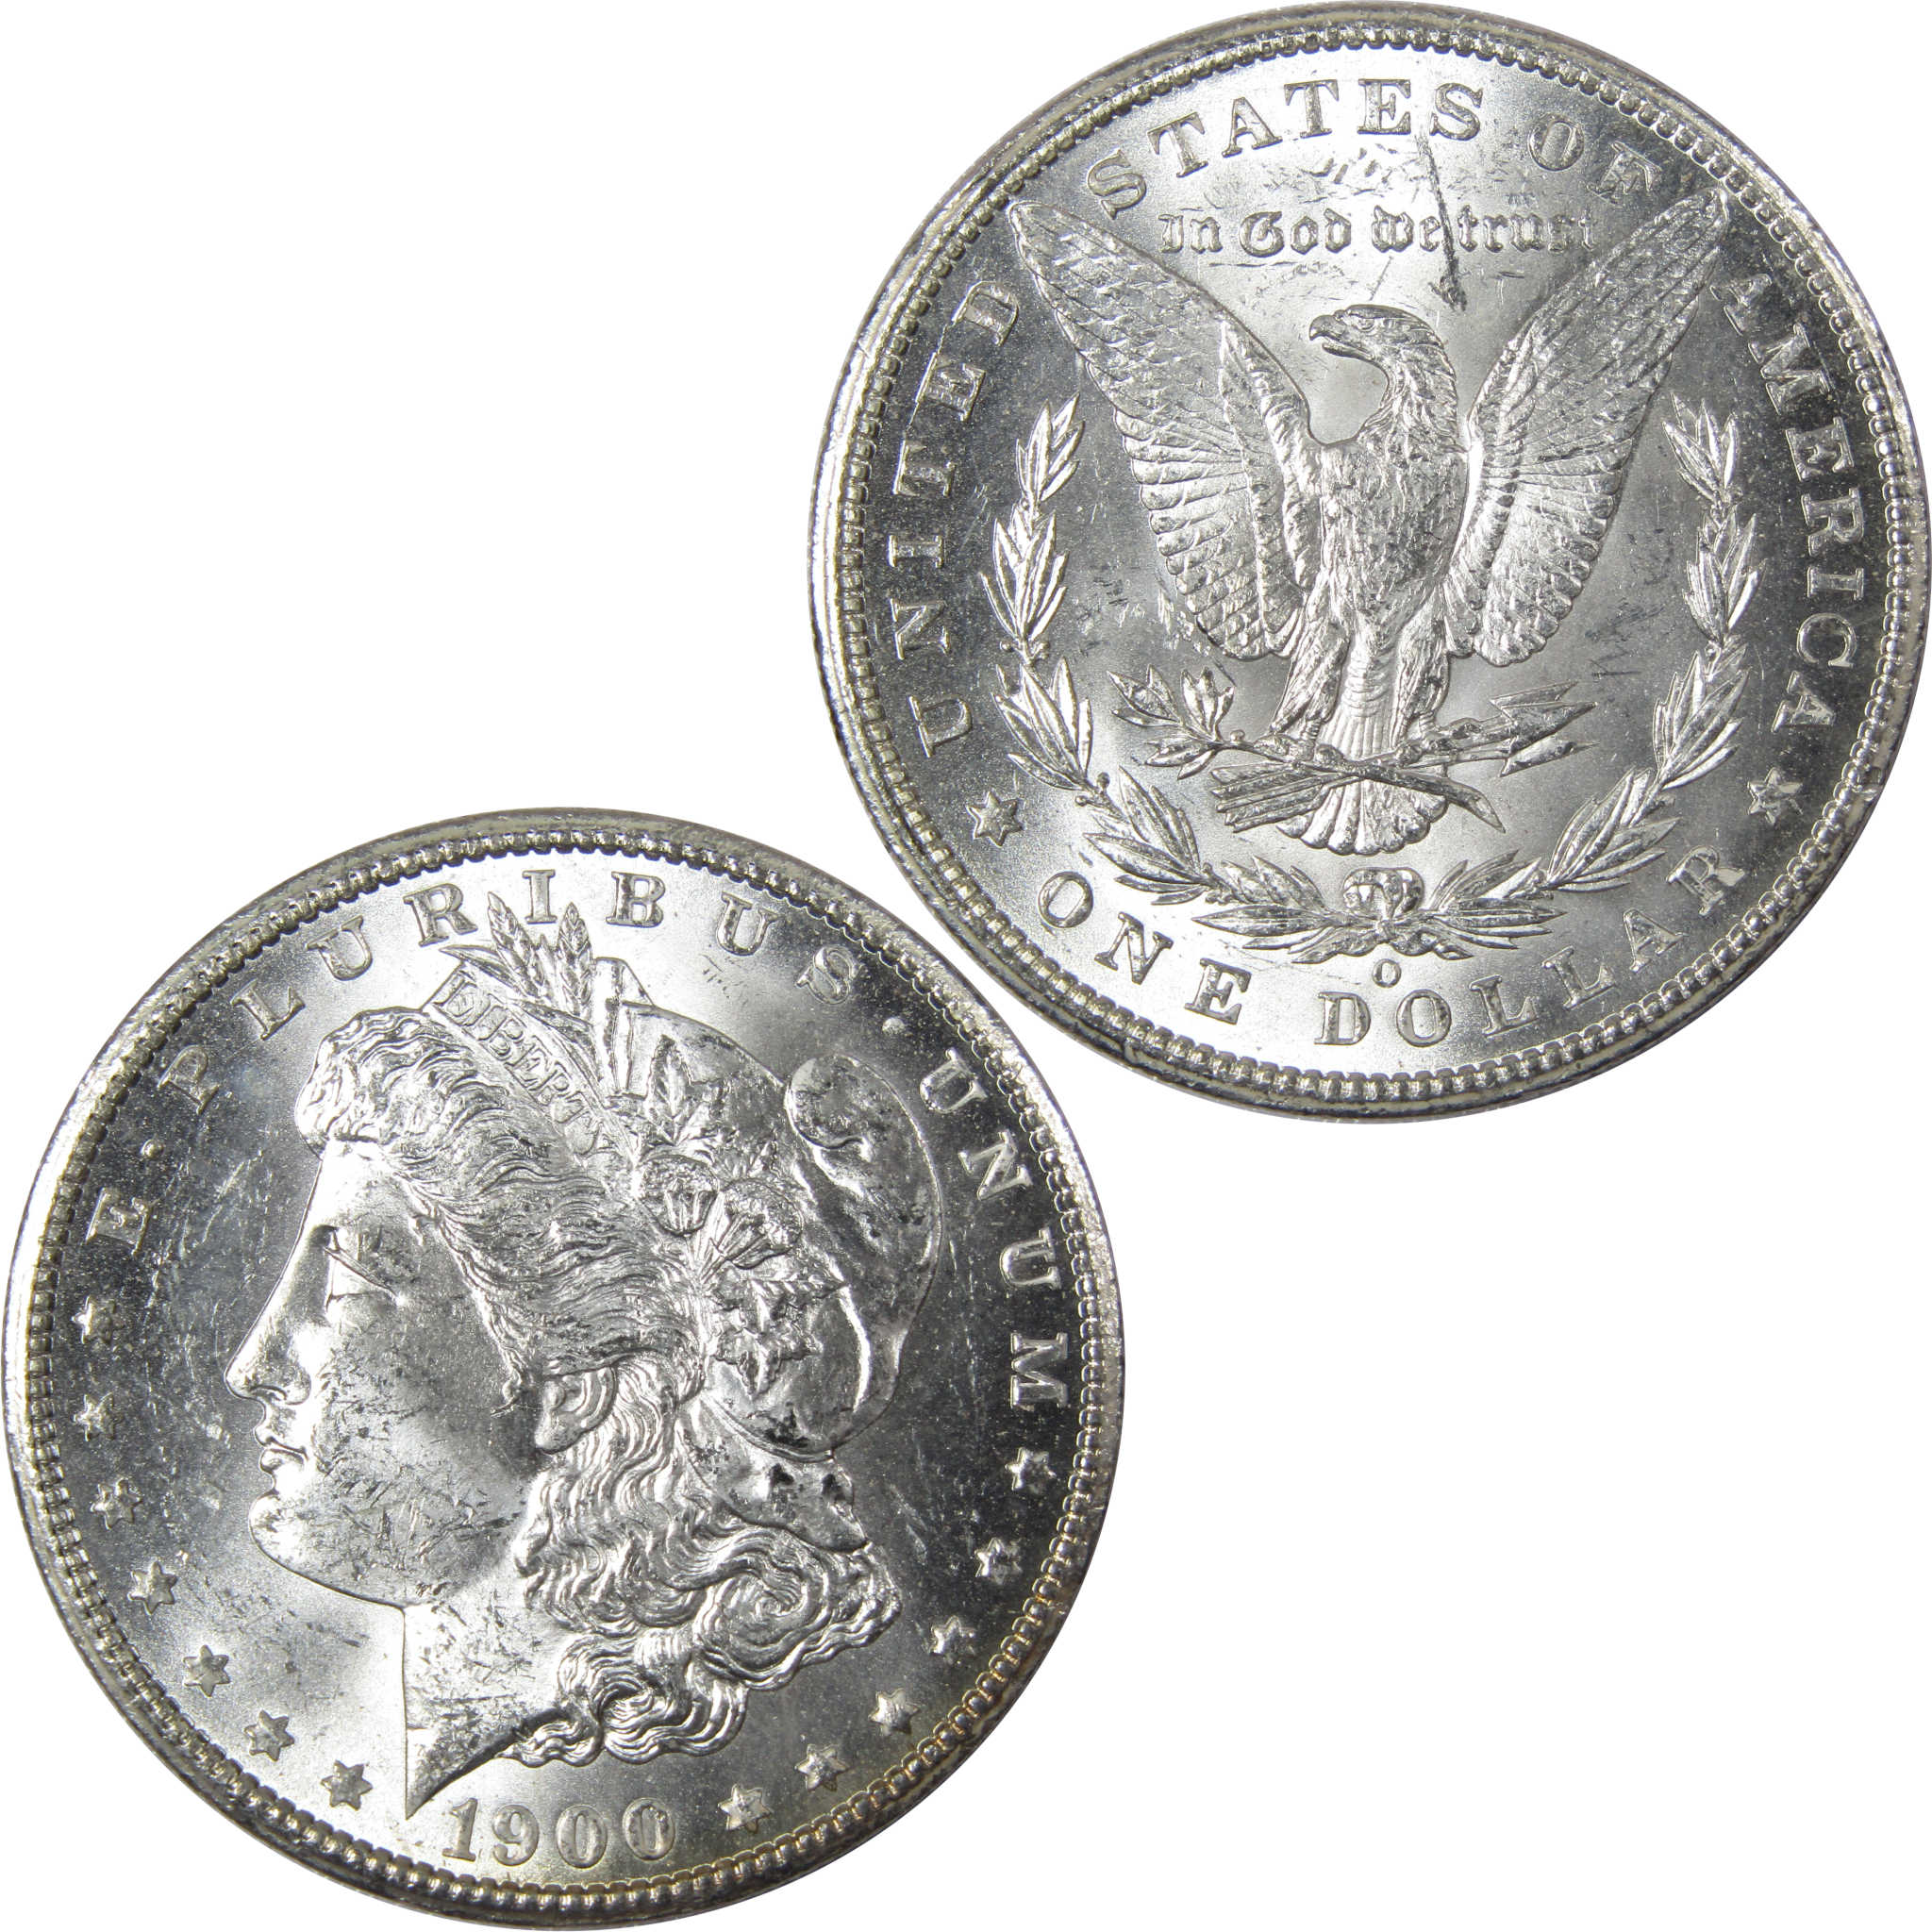 1900 O Morgan Dollar BU Uncirculated Mint State 90% Silver SKU:IPC9730 - Morgan coin - Morgan silver dollar - Morgan silver dollar for sale - Profile Coins &amp; Collectibles